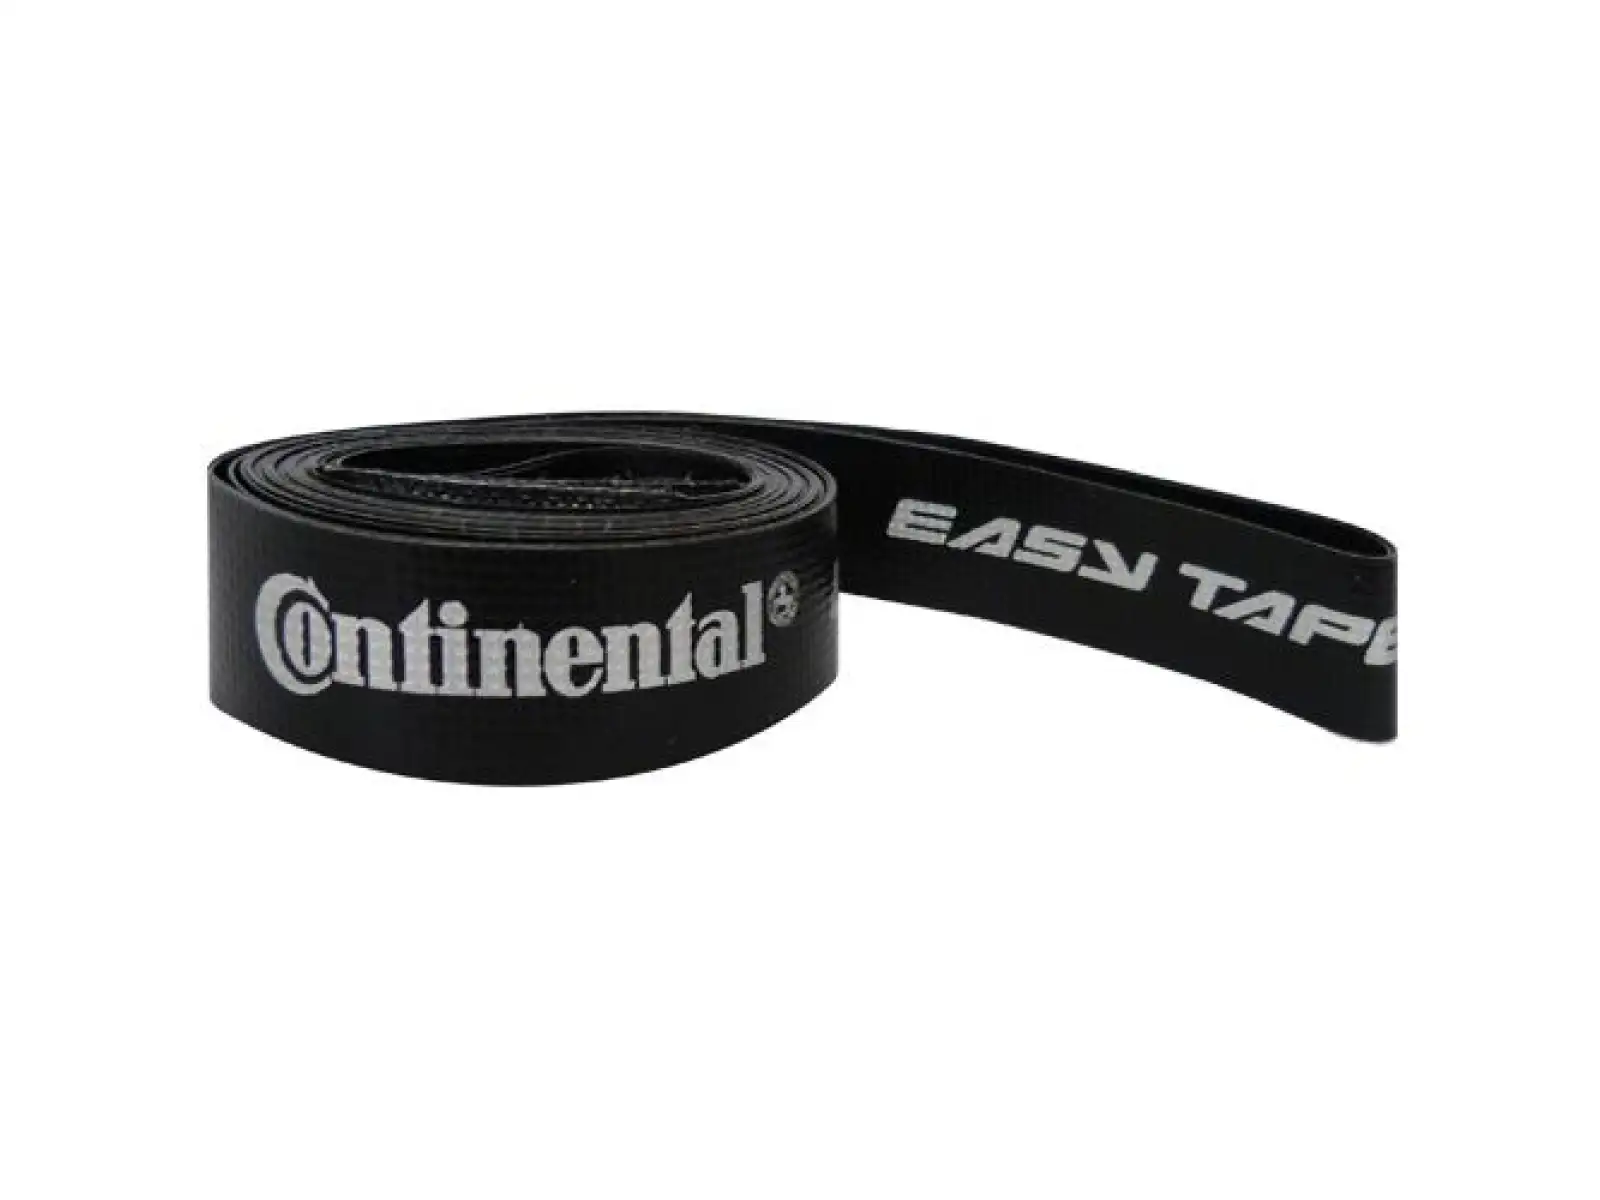 Continental EasyTape páska do ráfku 22-584 1 ks